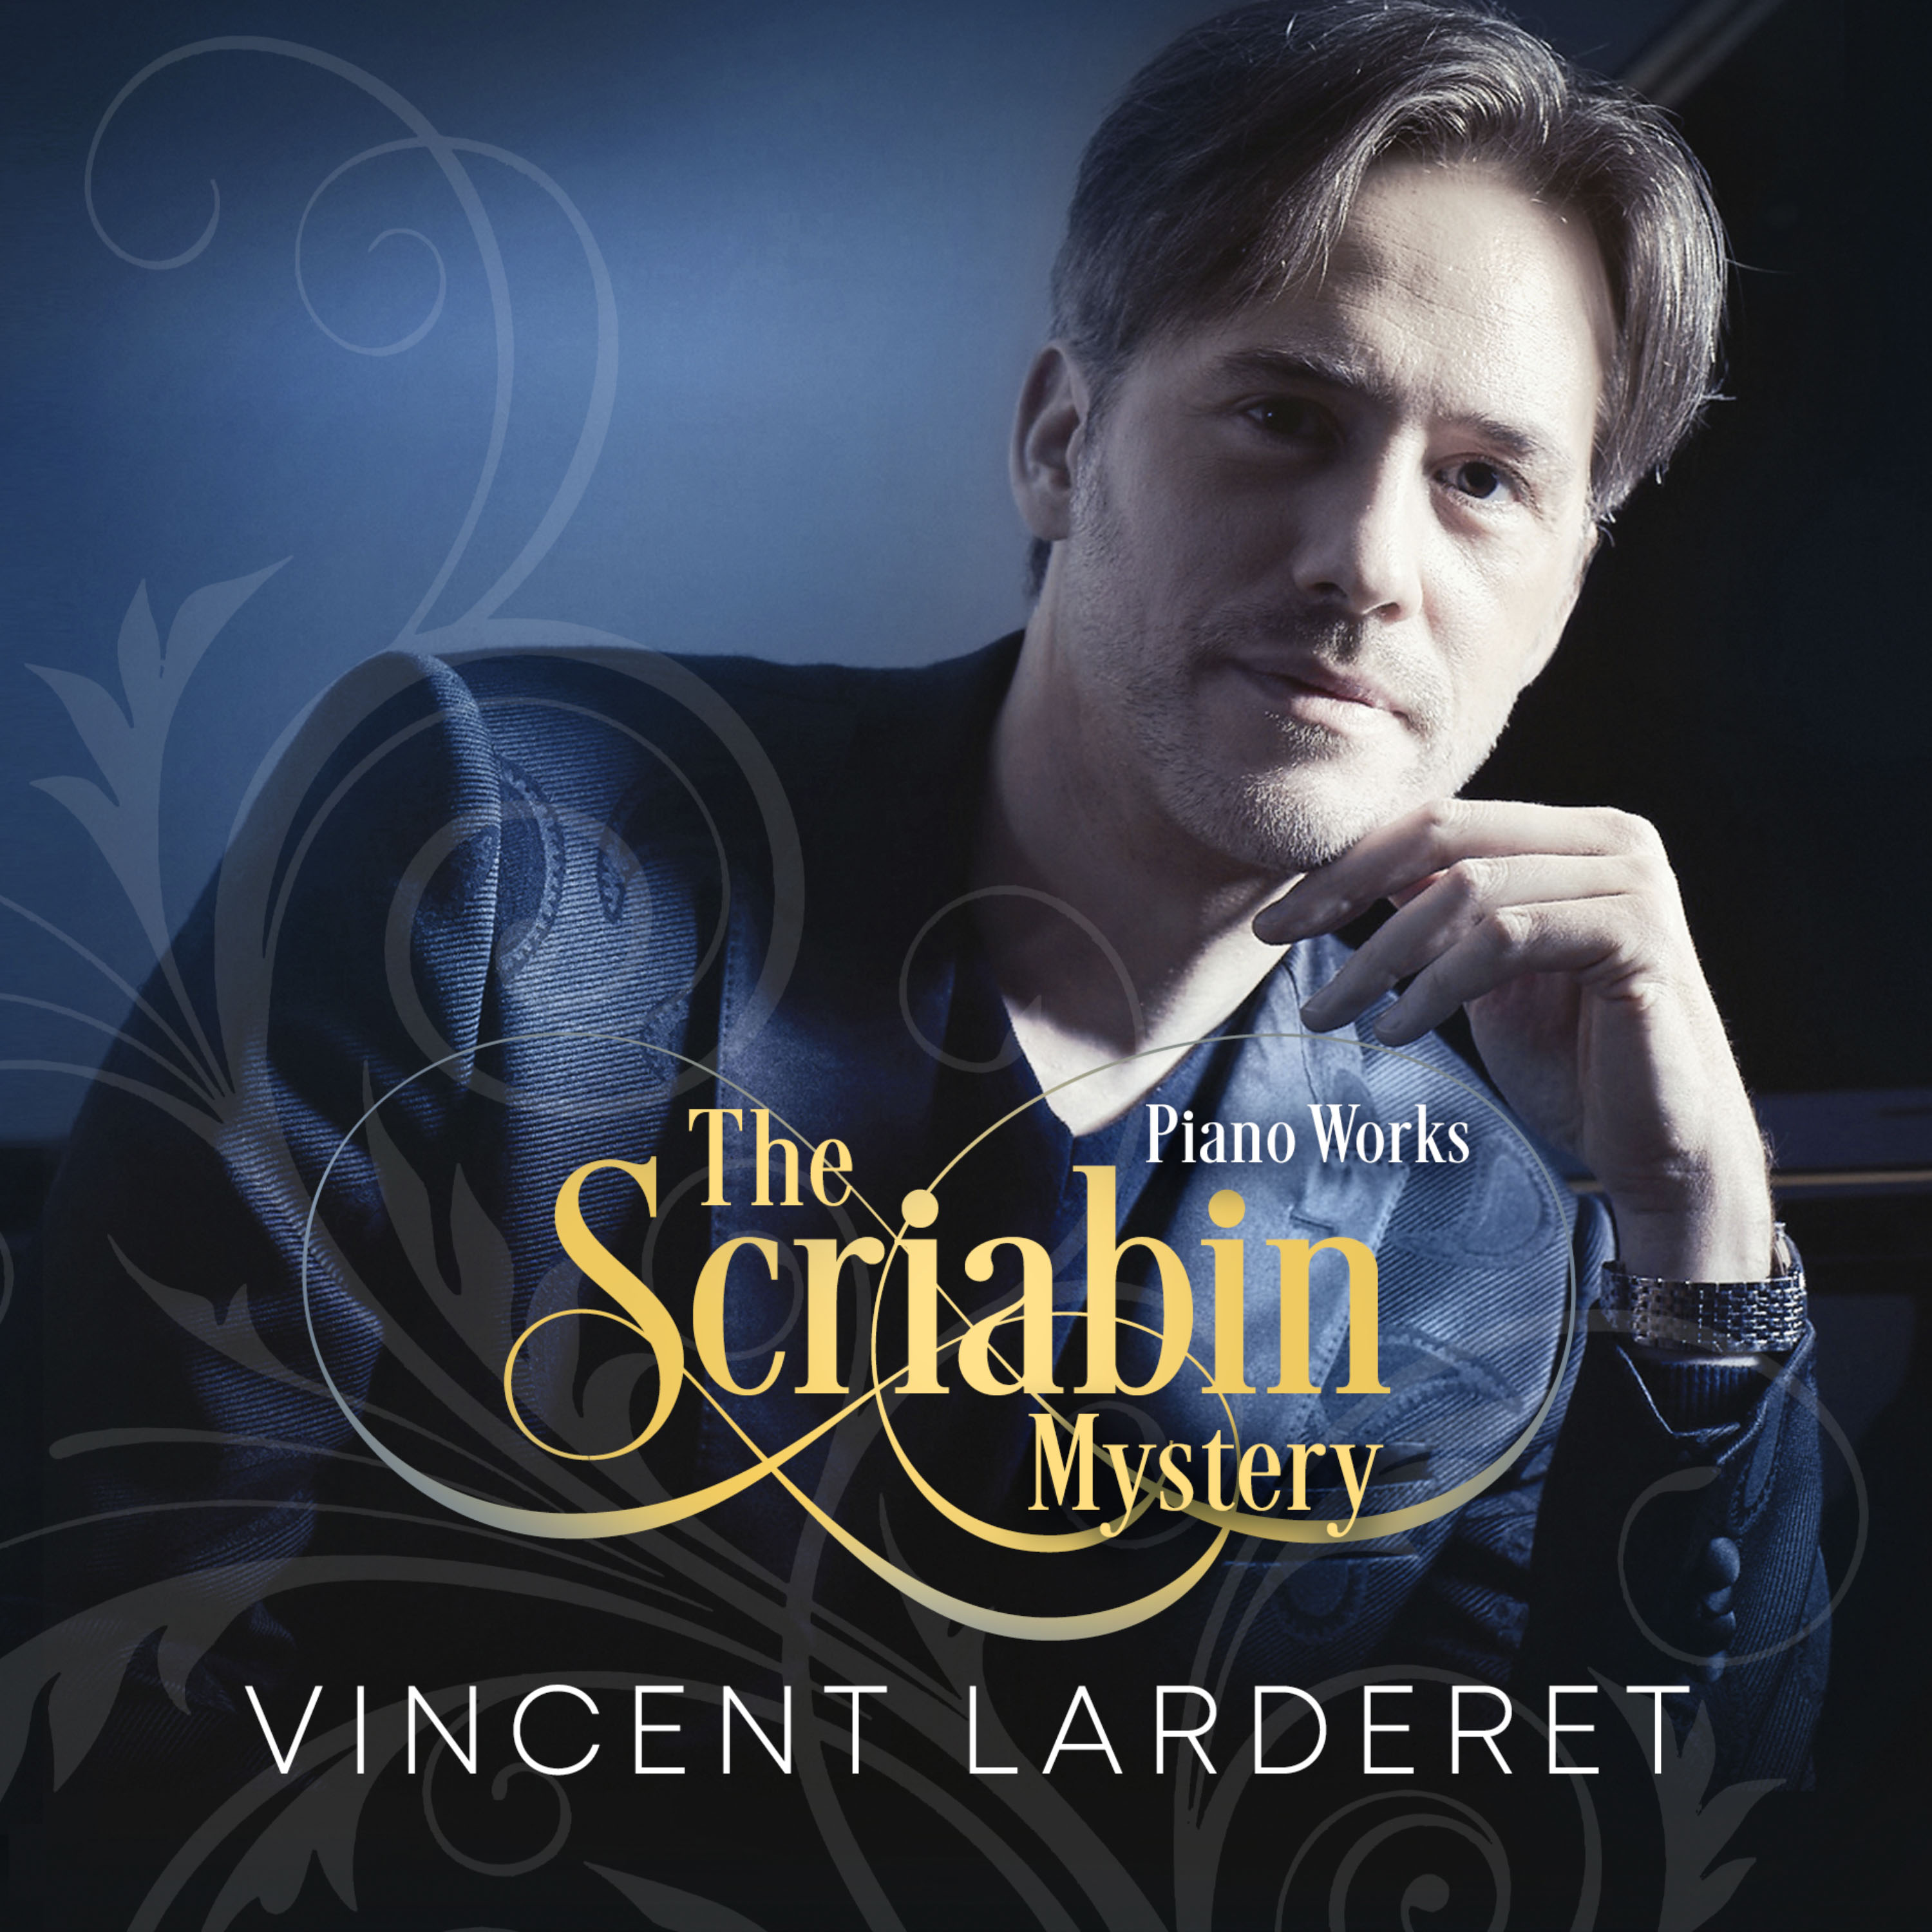 The Scriabin Mystery booklet